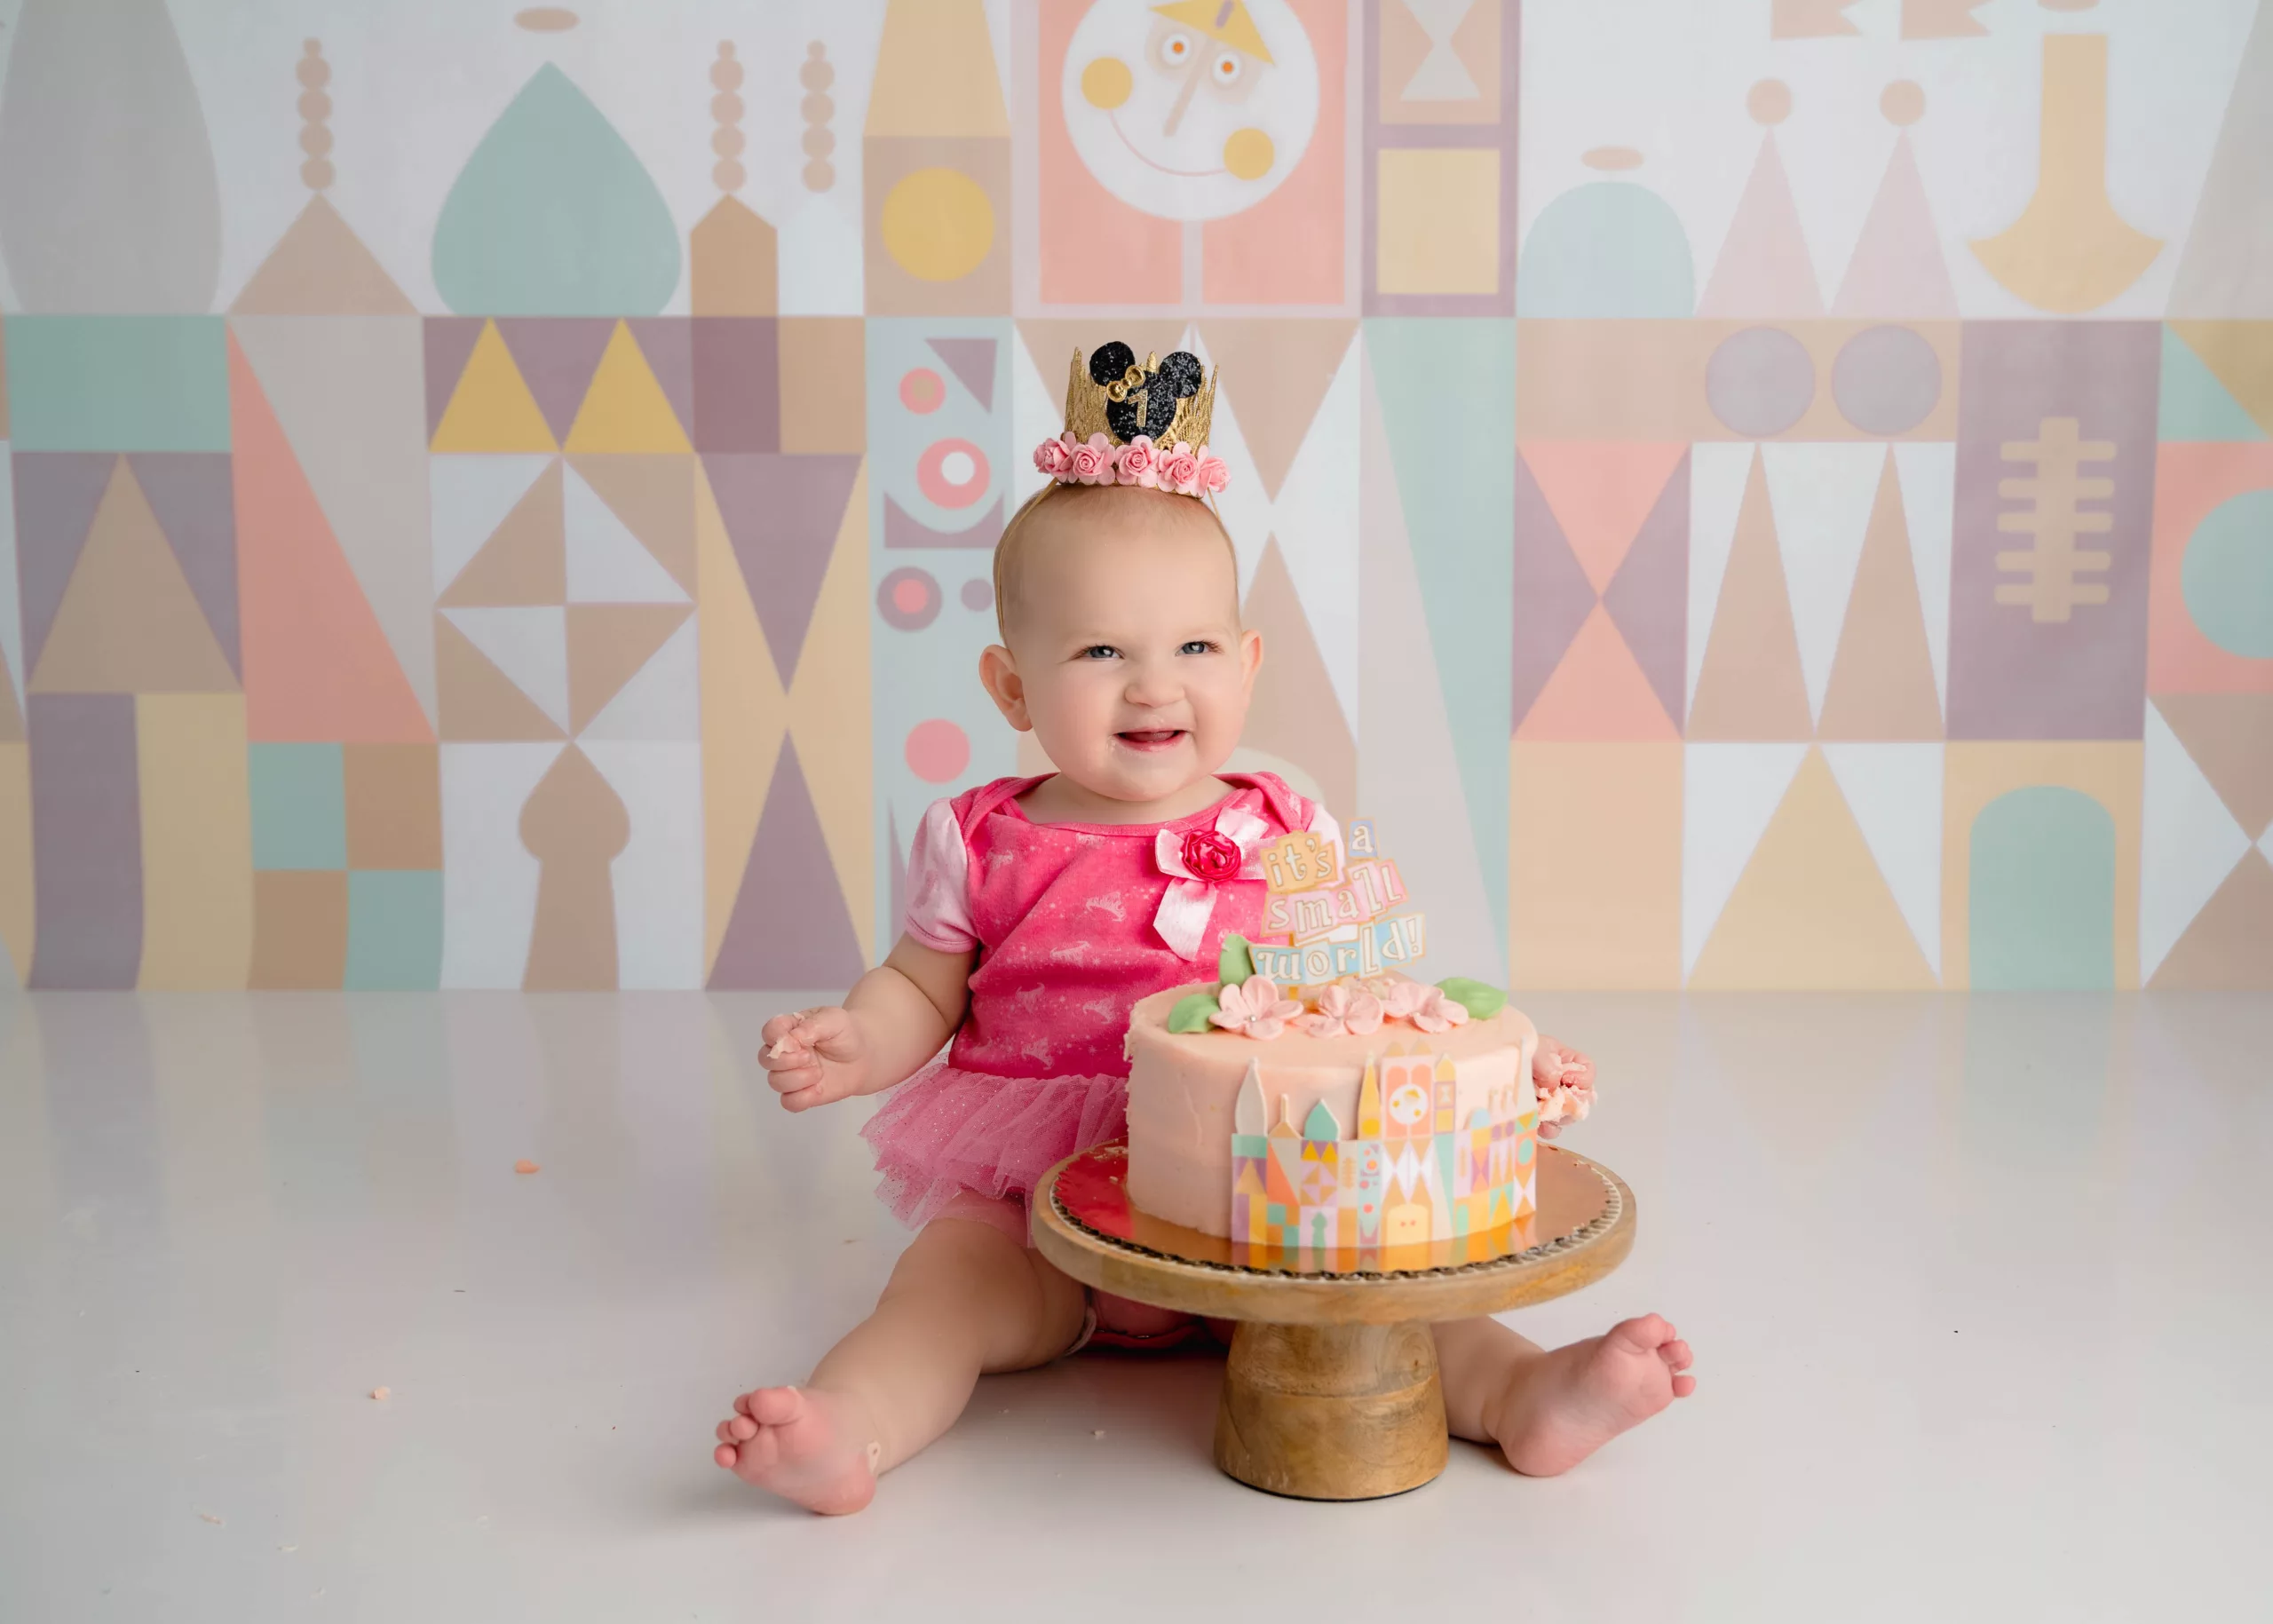 Orlando Girl Cake Smash 1st Birthday Photographer Photo Studio its a small world disney mickey crown